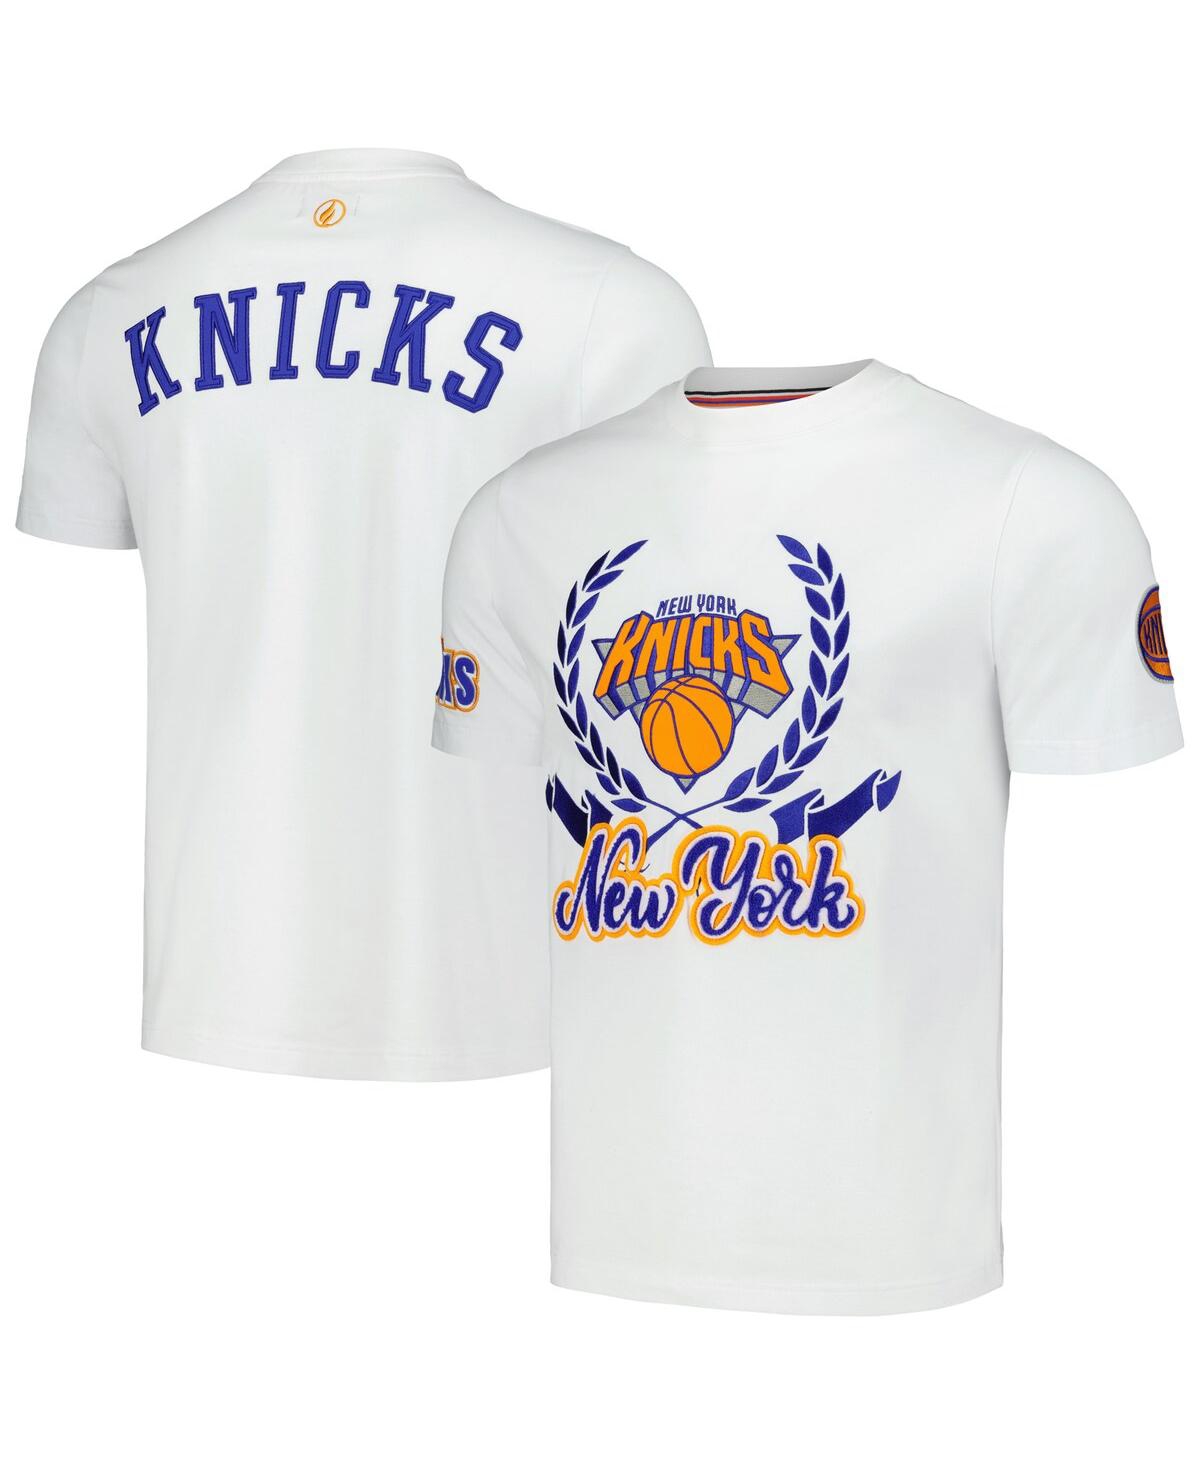 Men's and Women's Fisll White New York Knicks Heritage Crest T-shirt - White